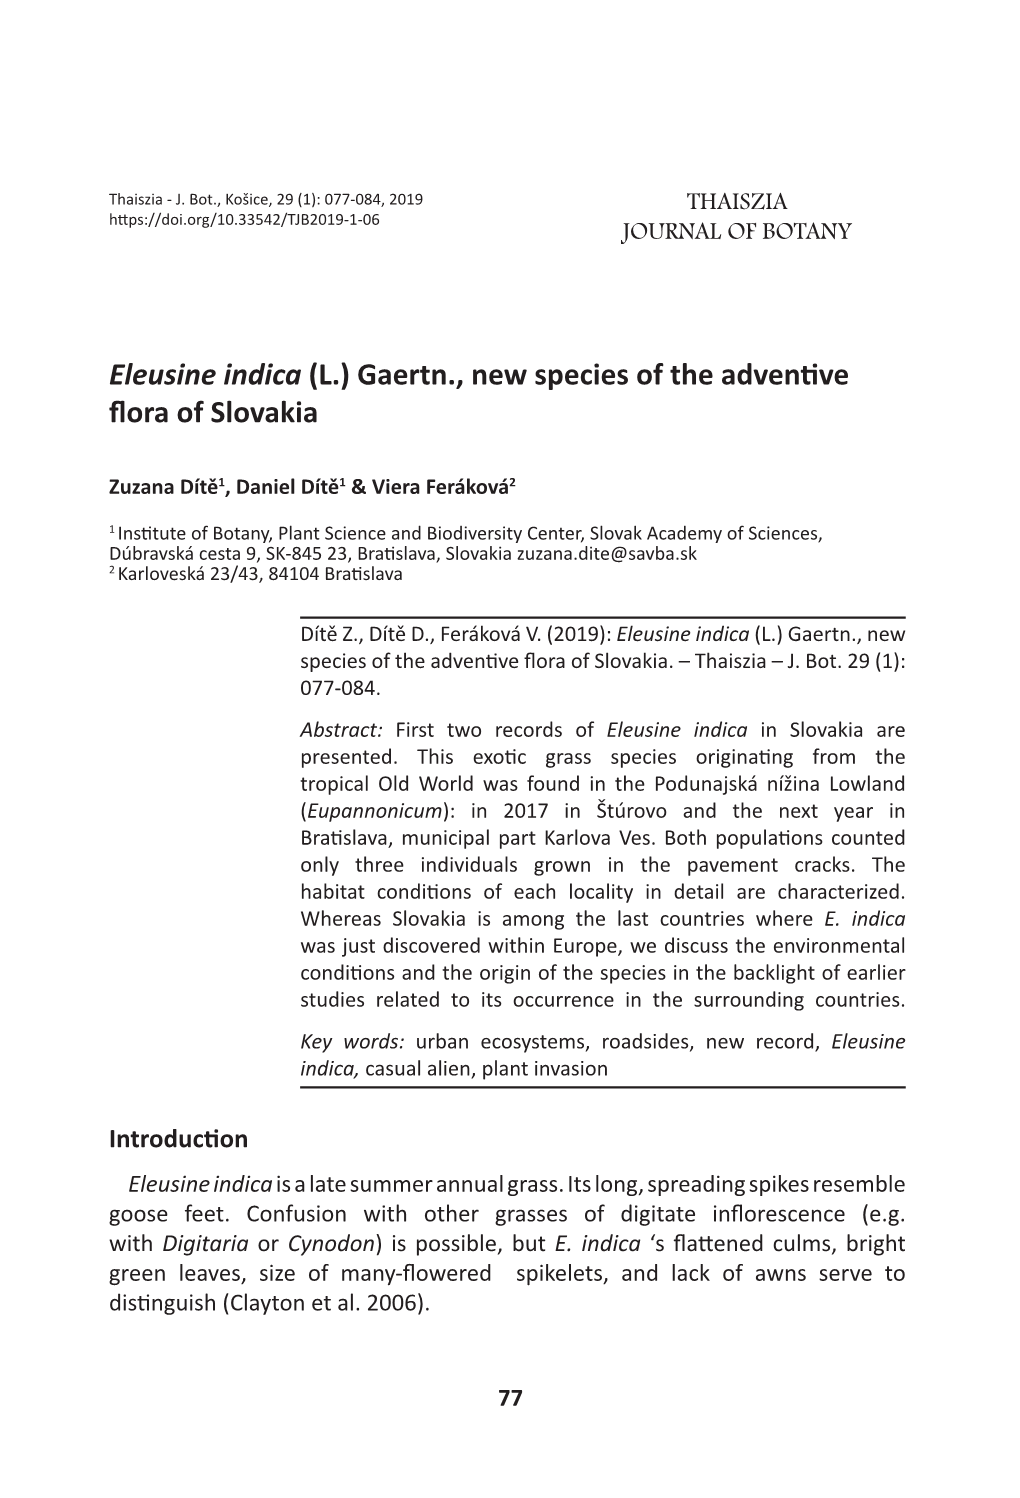 Eleusine Indica (L.) Gaertn., New Species of the Adventive Flora of Slovakia